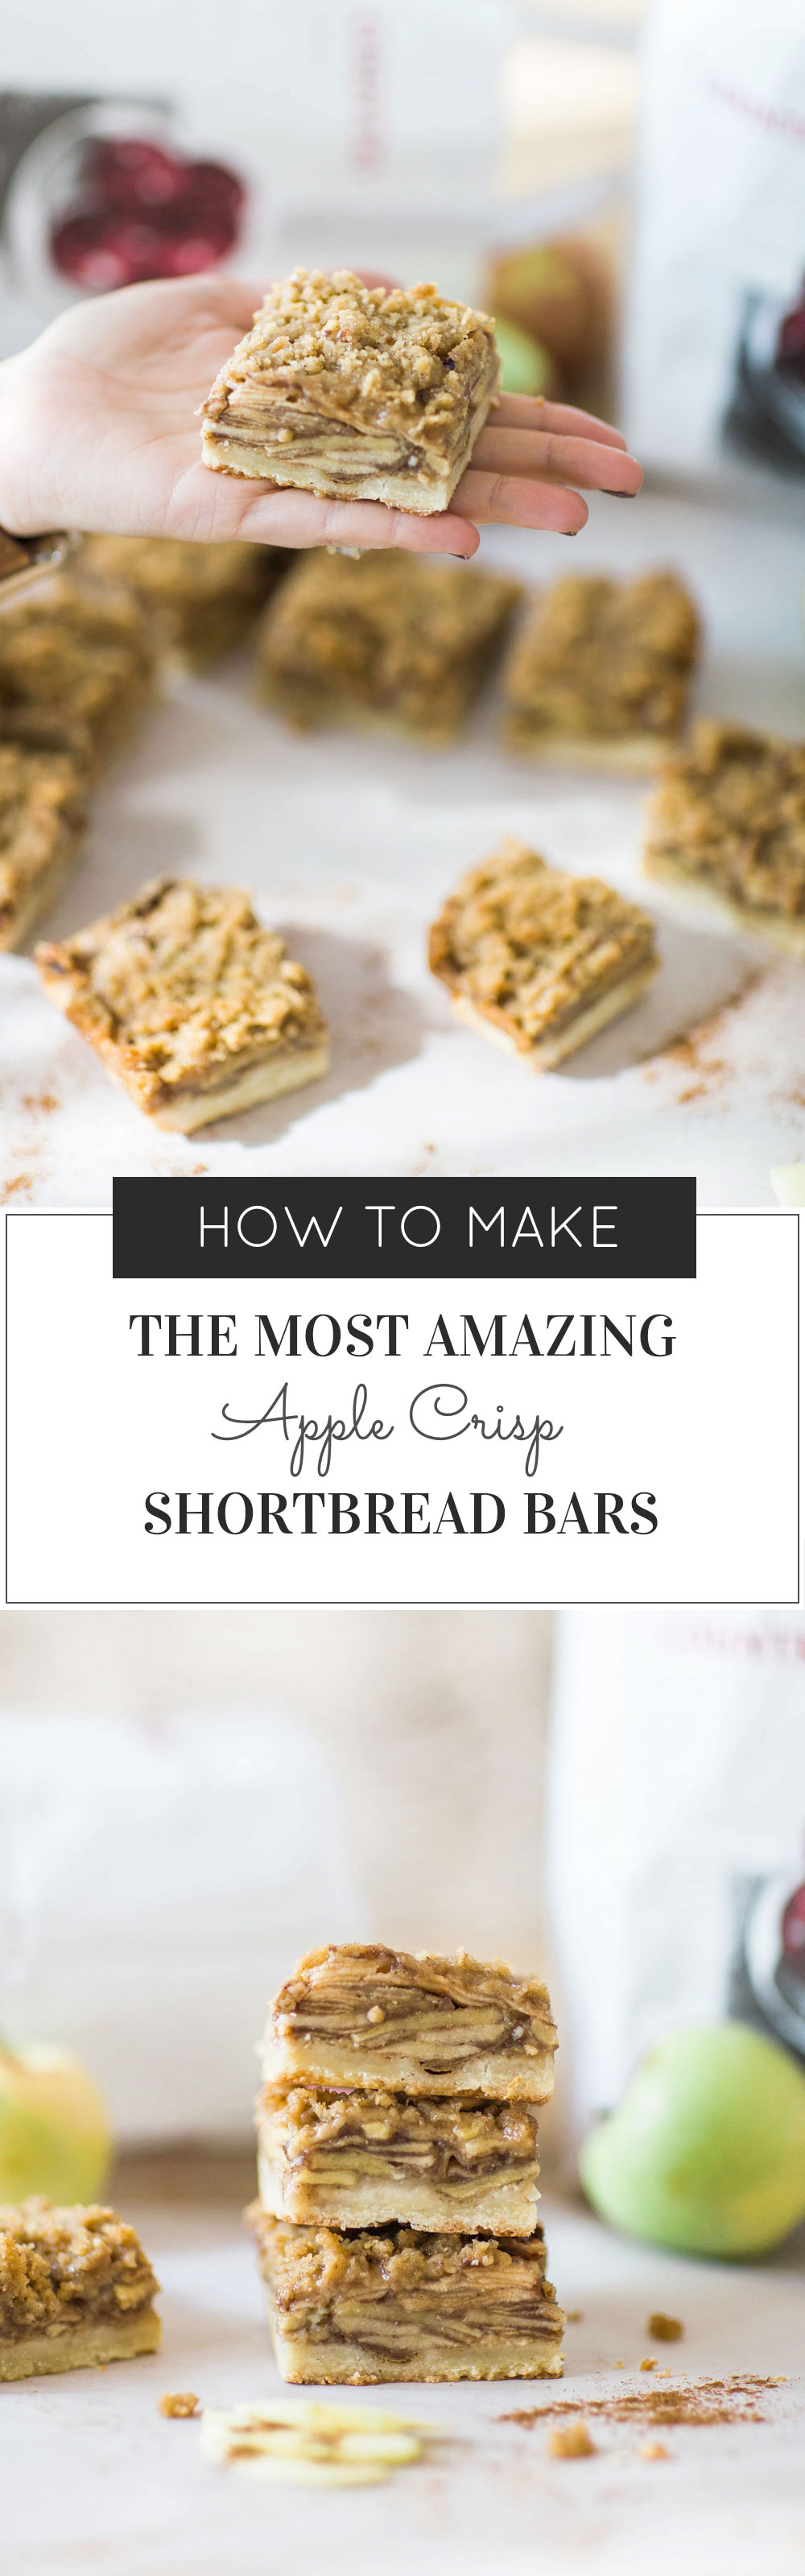 How to Make the Most Amazing Apple Crisp Shortbread Bars. Click through for the recipe. | glitterinc.com | @glitterinc